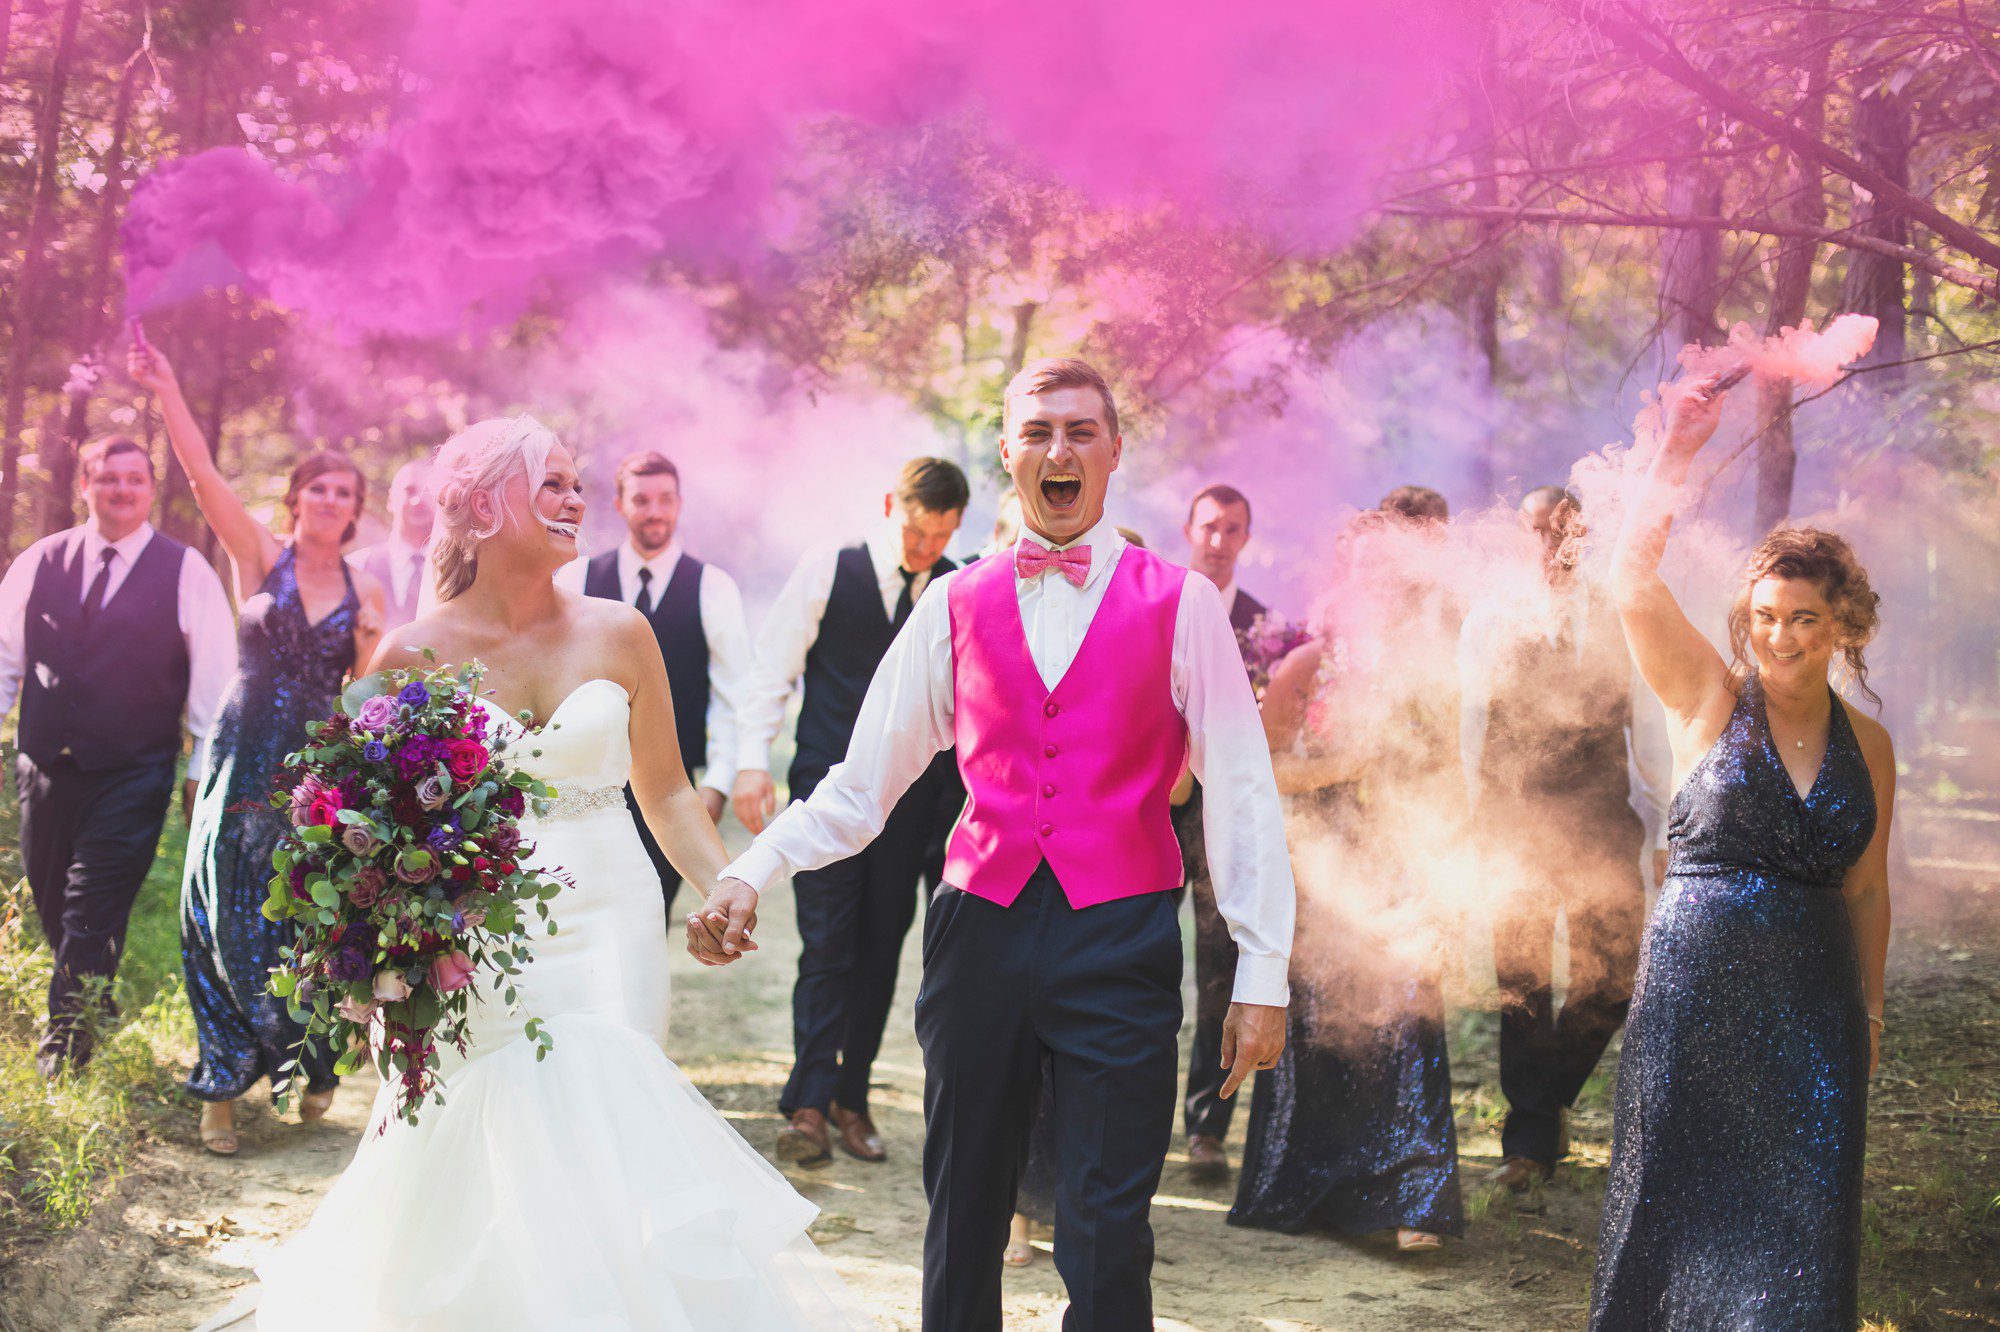 Southern wedding with pink smoke bombs